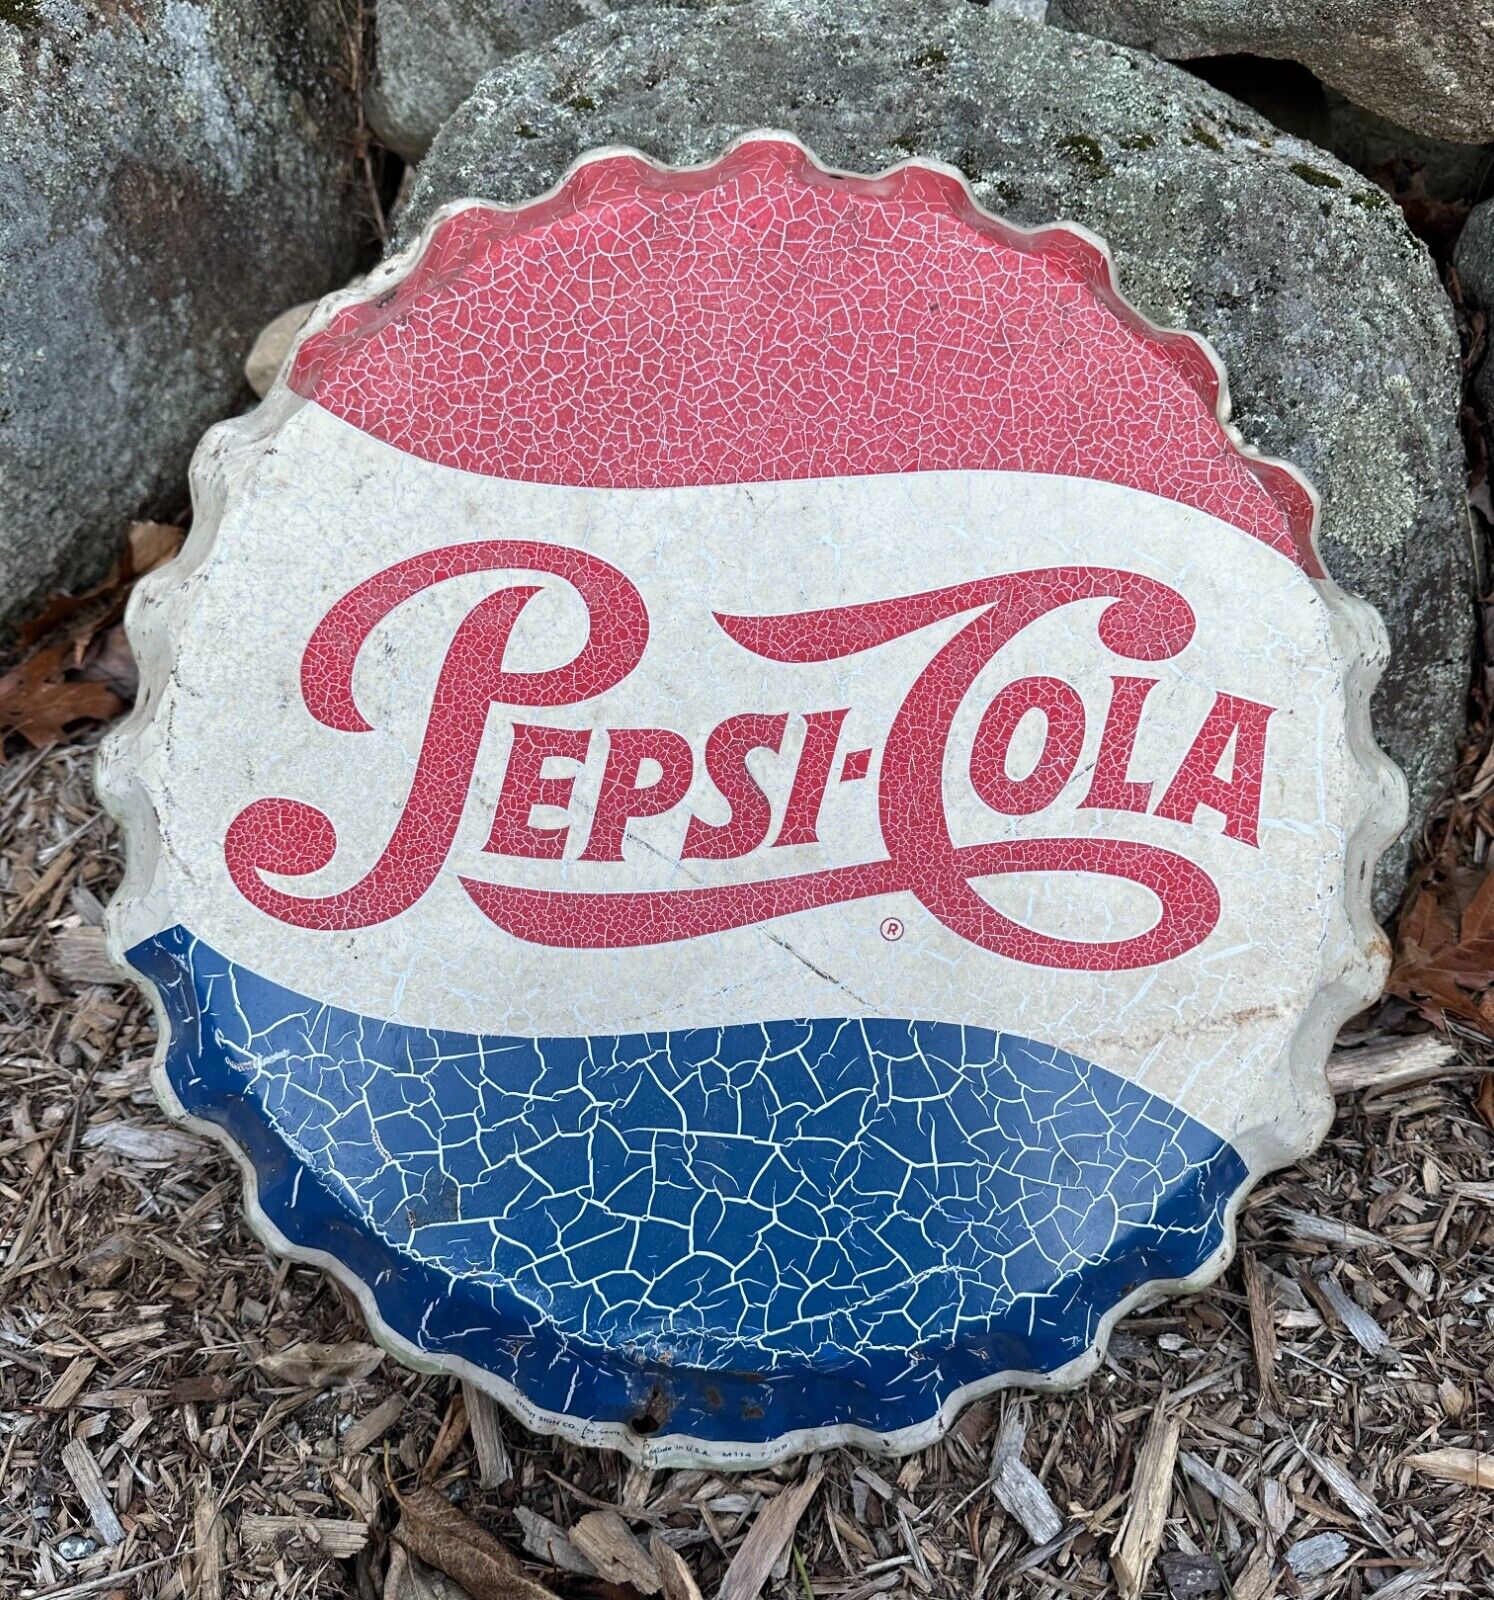 1960s Pepsi Cola Bottle Cap Vintage Sign Original Antique Soda Pop Advertising